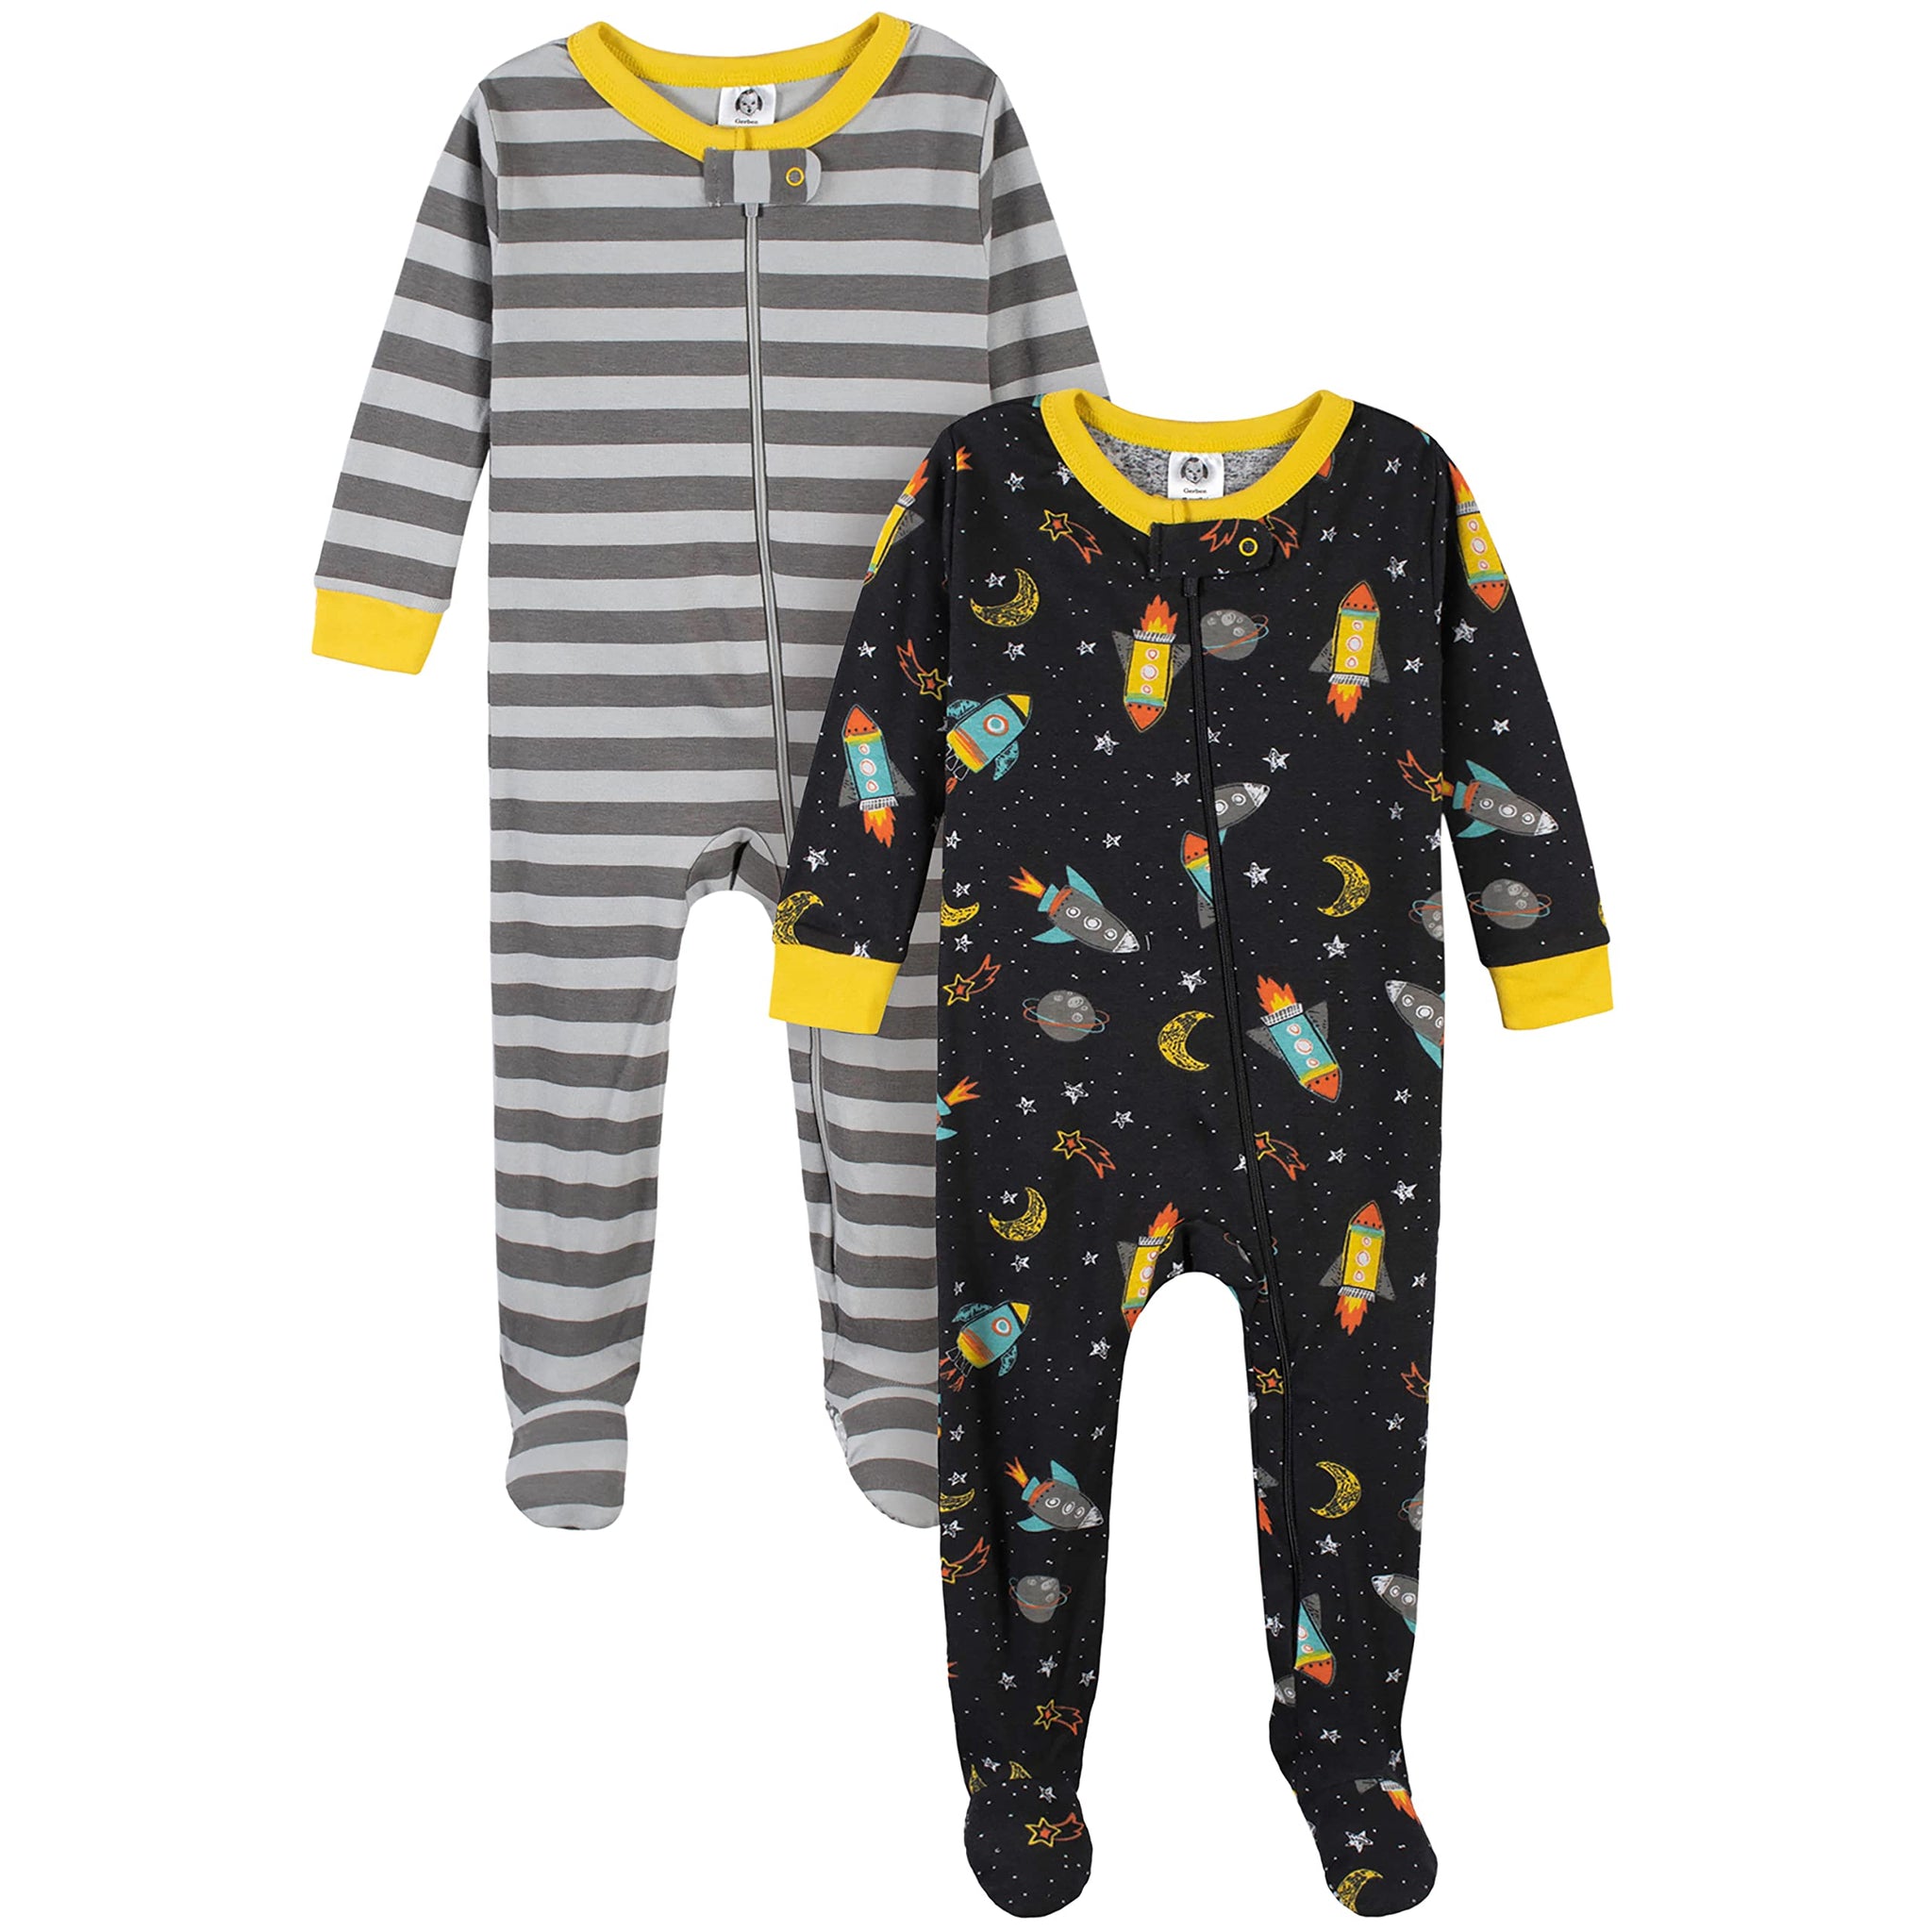 Gerber Baby Boys' 2-Pack Footed Pajamas, Rocket Ship Black, 0-3 Months